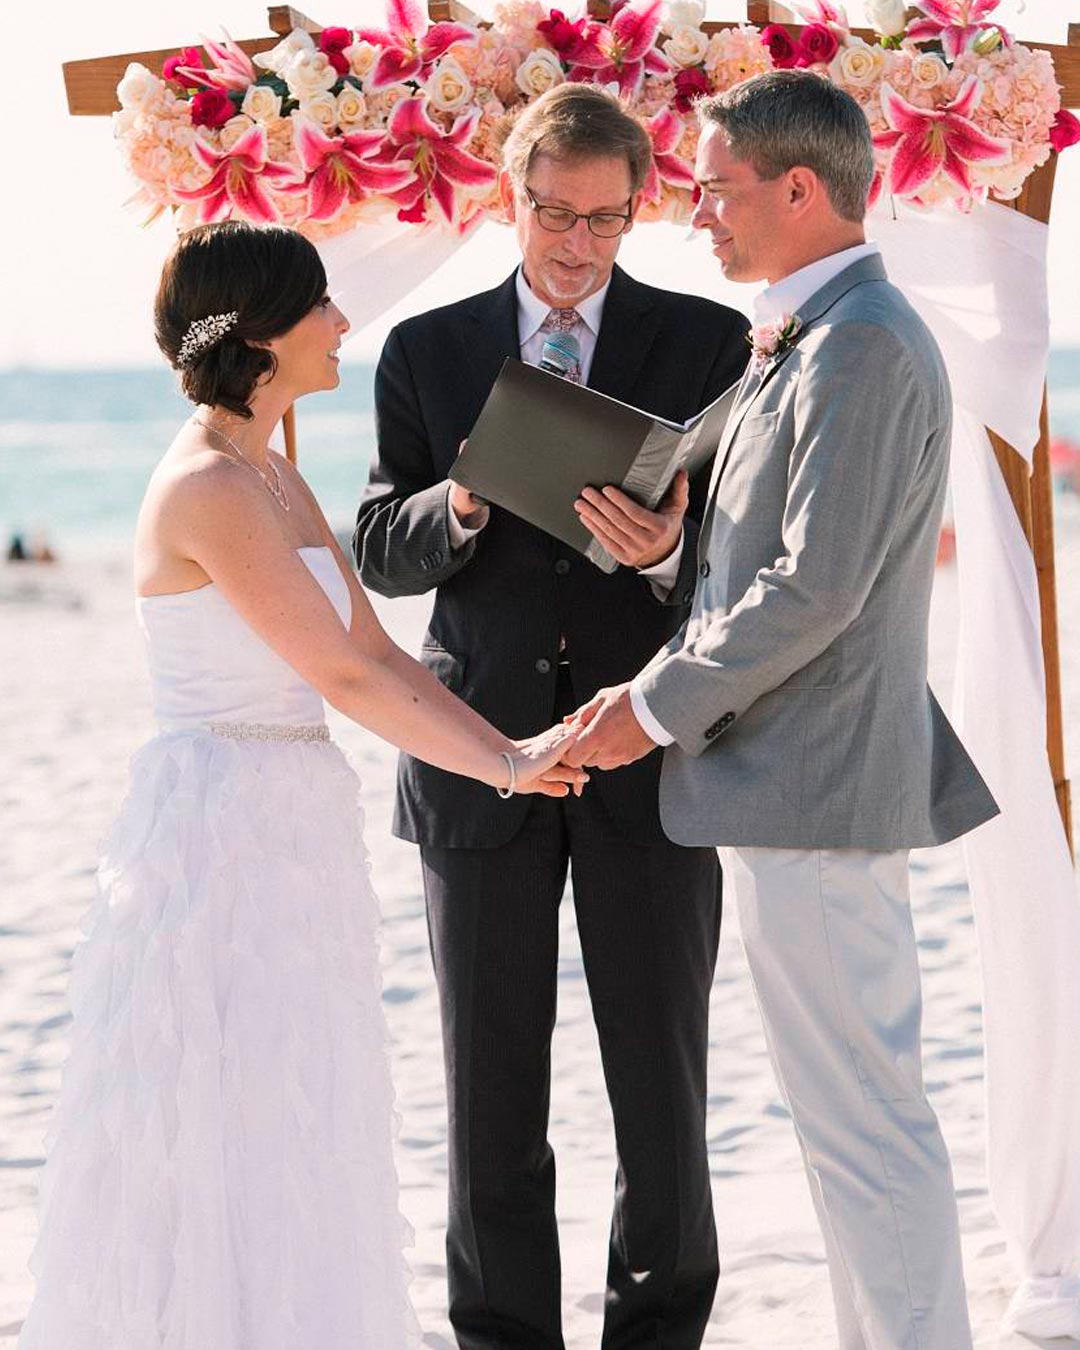 wedding officiant speeches arch ceremony bride groom beach